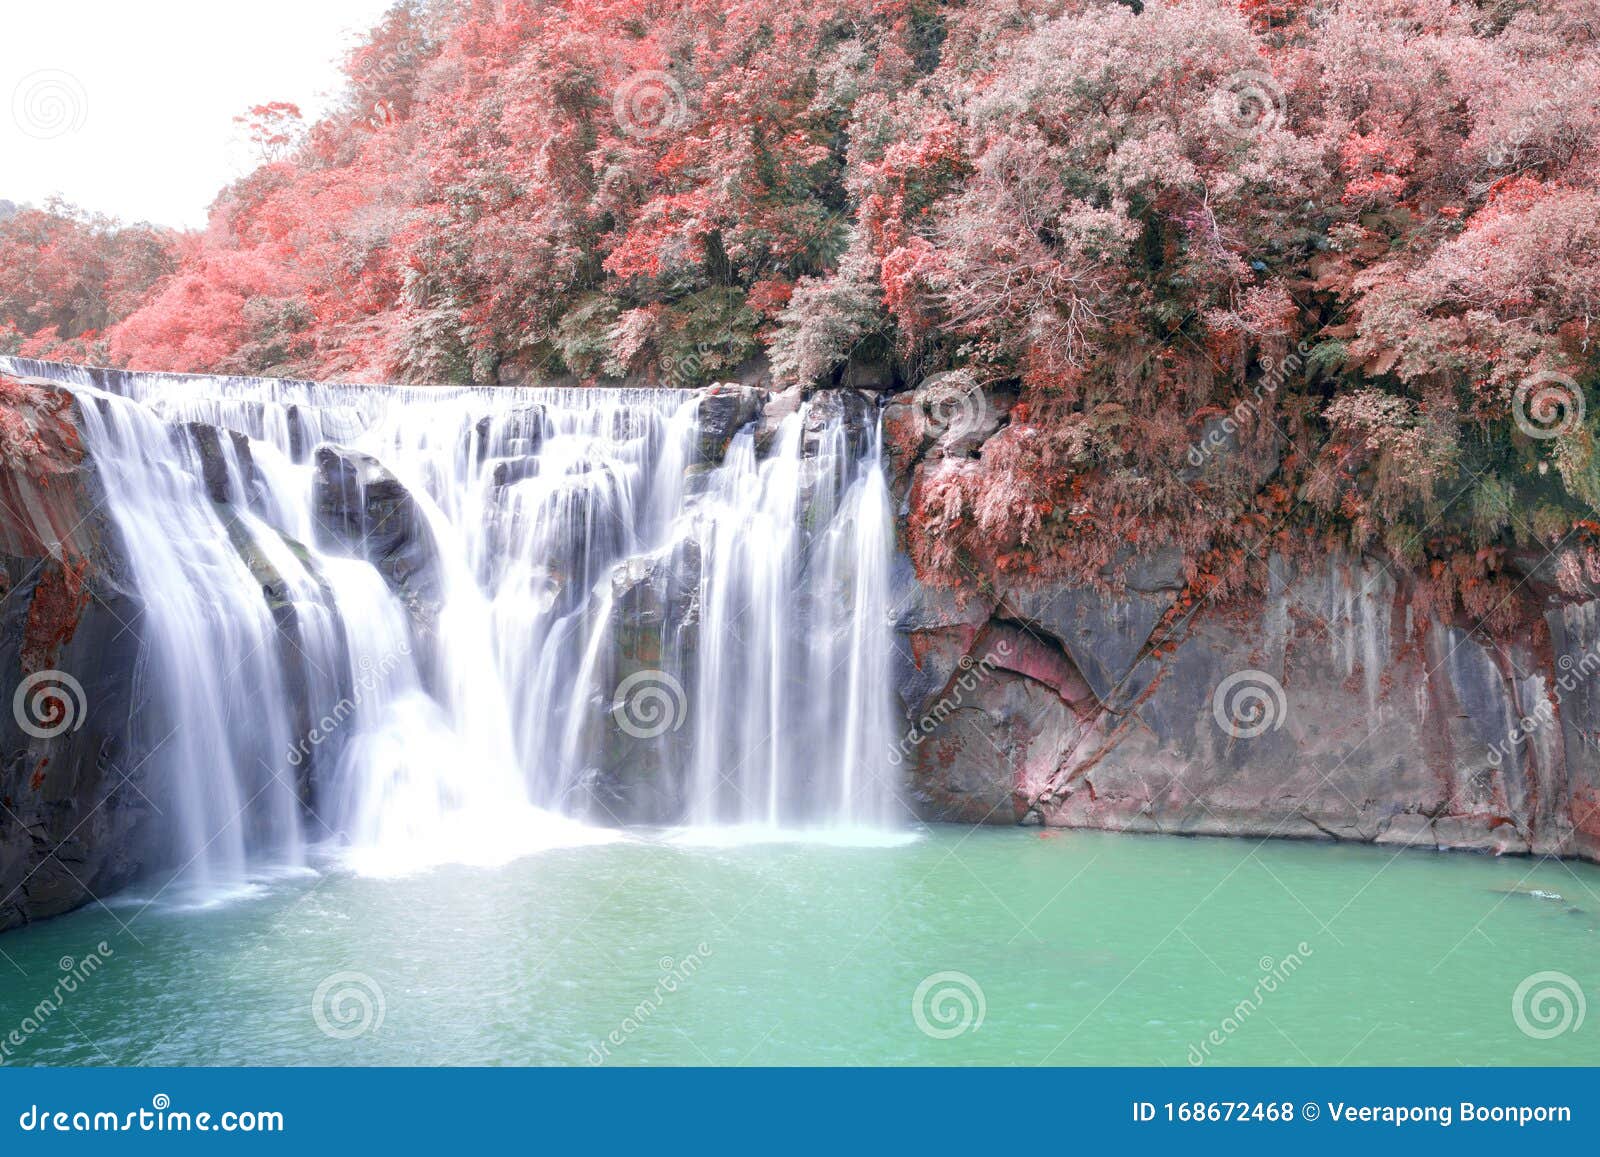 Beautiful Shifen Waterfall Nature Scenery Located in Pingxi District Taiwan Stock Photo Image of city, plant: 168672468